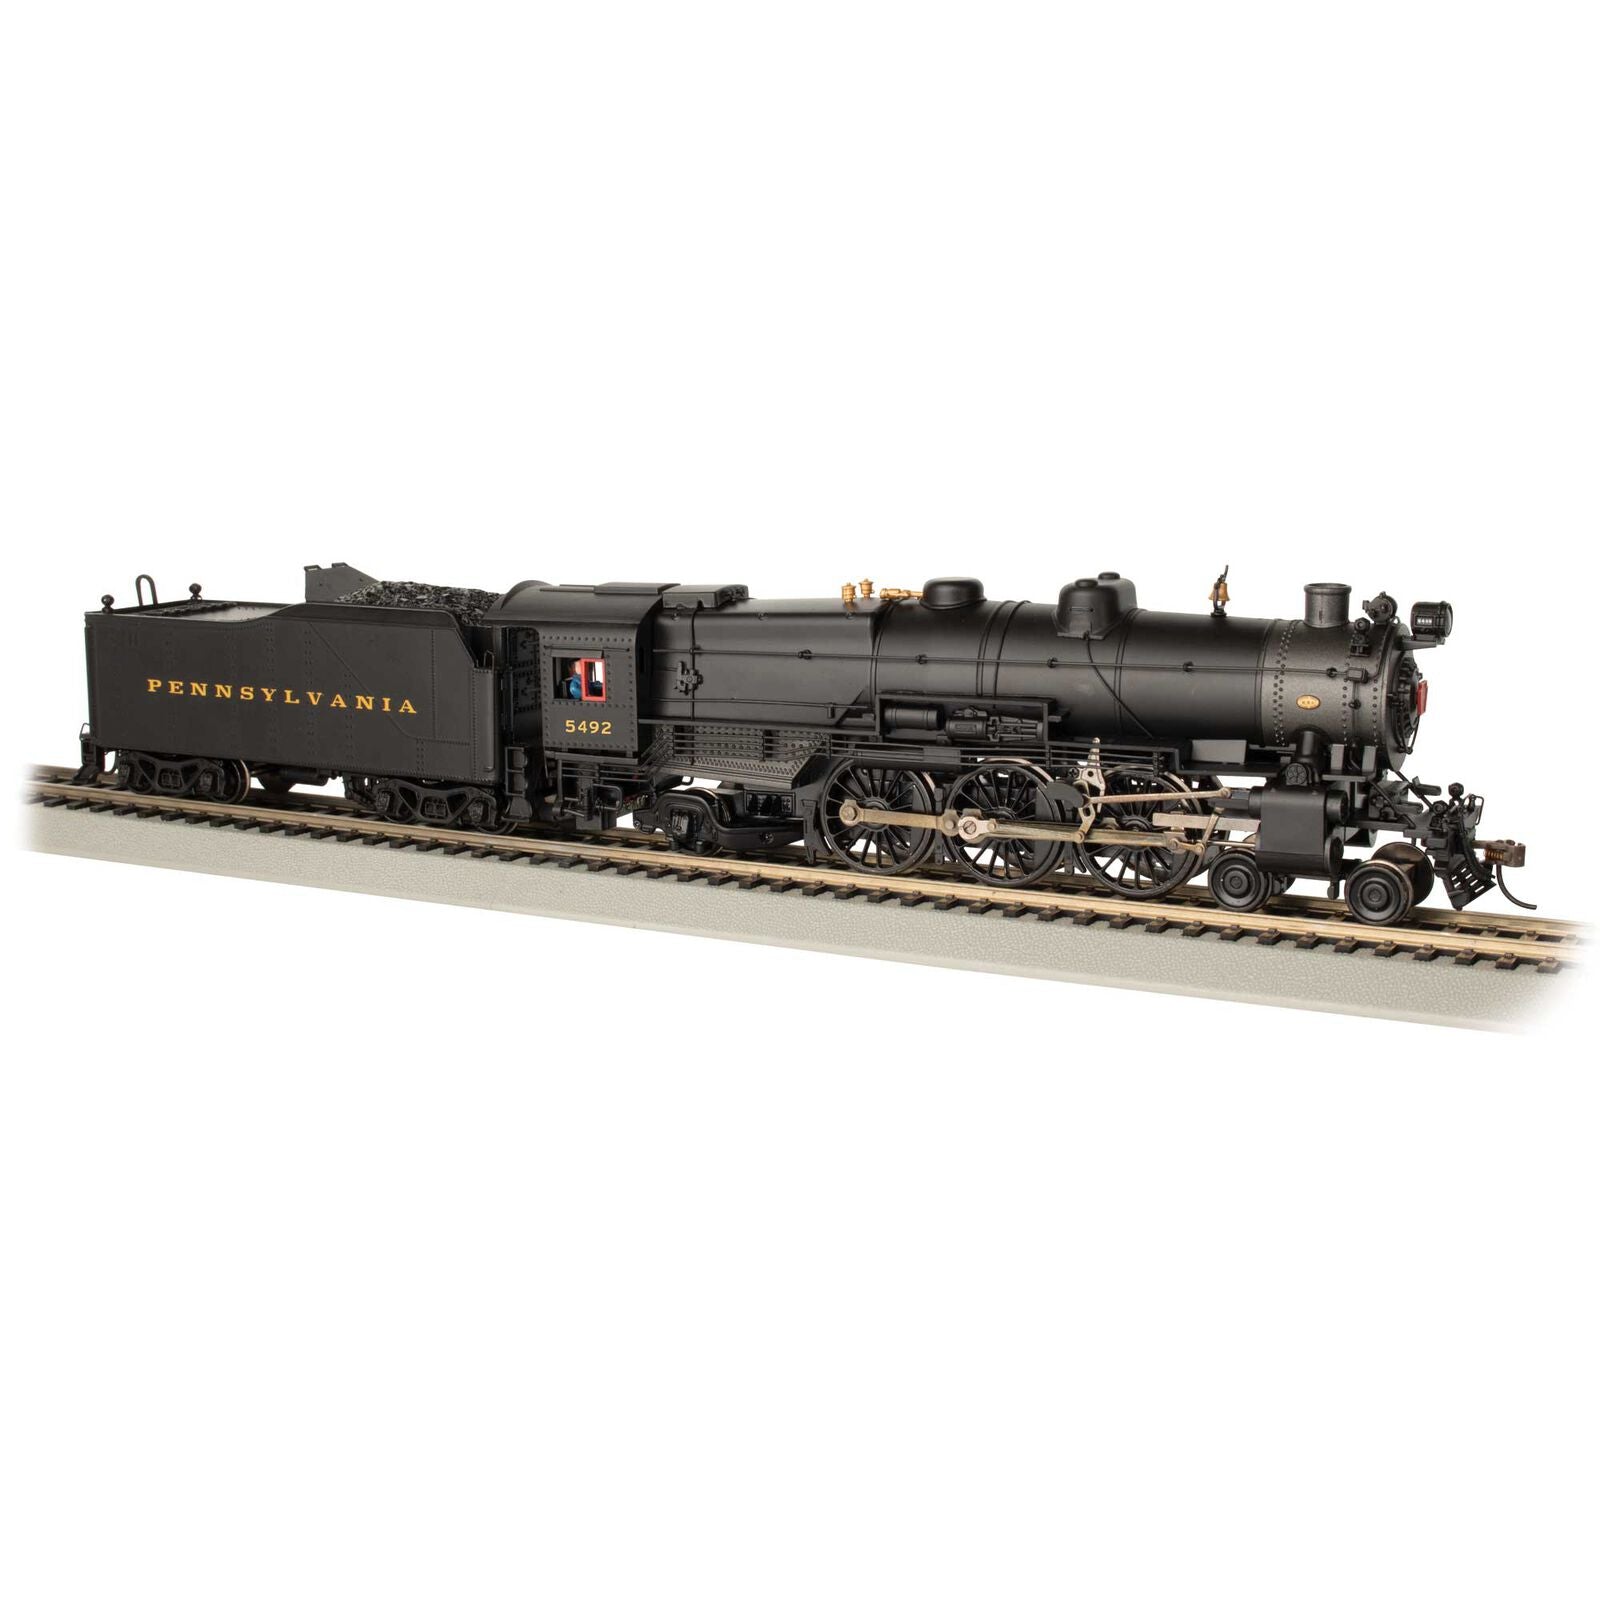 Bachmann K4 4 - 6 - 2 "Pacific" Locomotive - PRR #3747 (Post - War with Modern Pilot), HO Scale